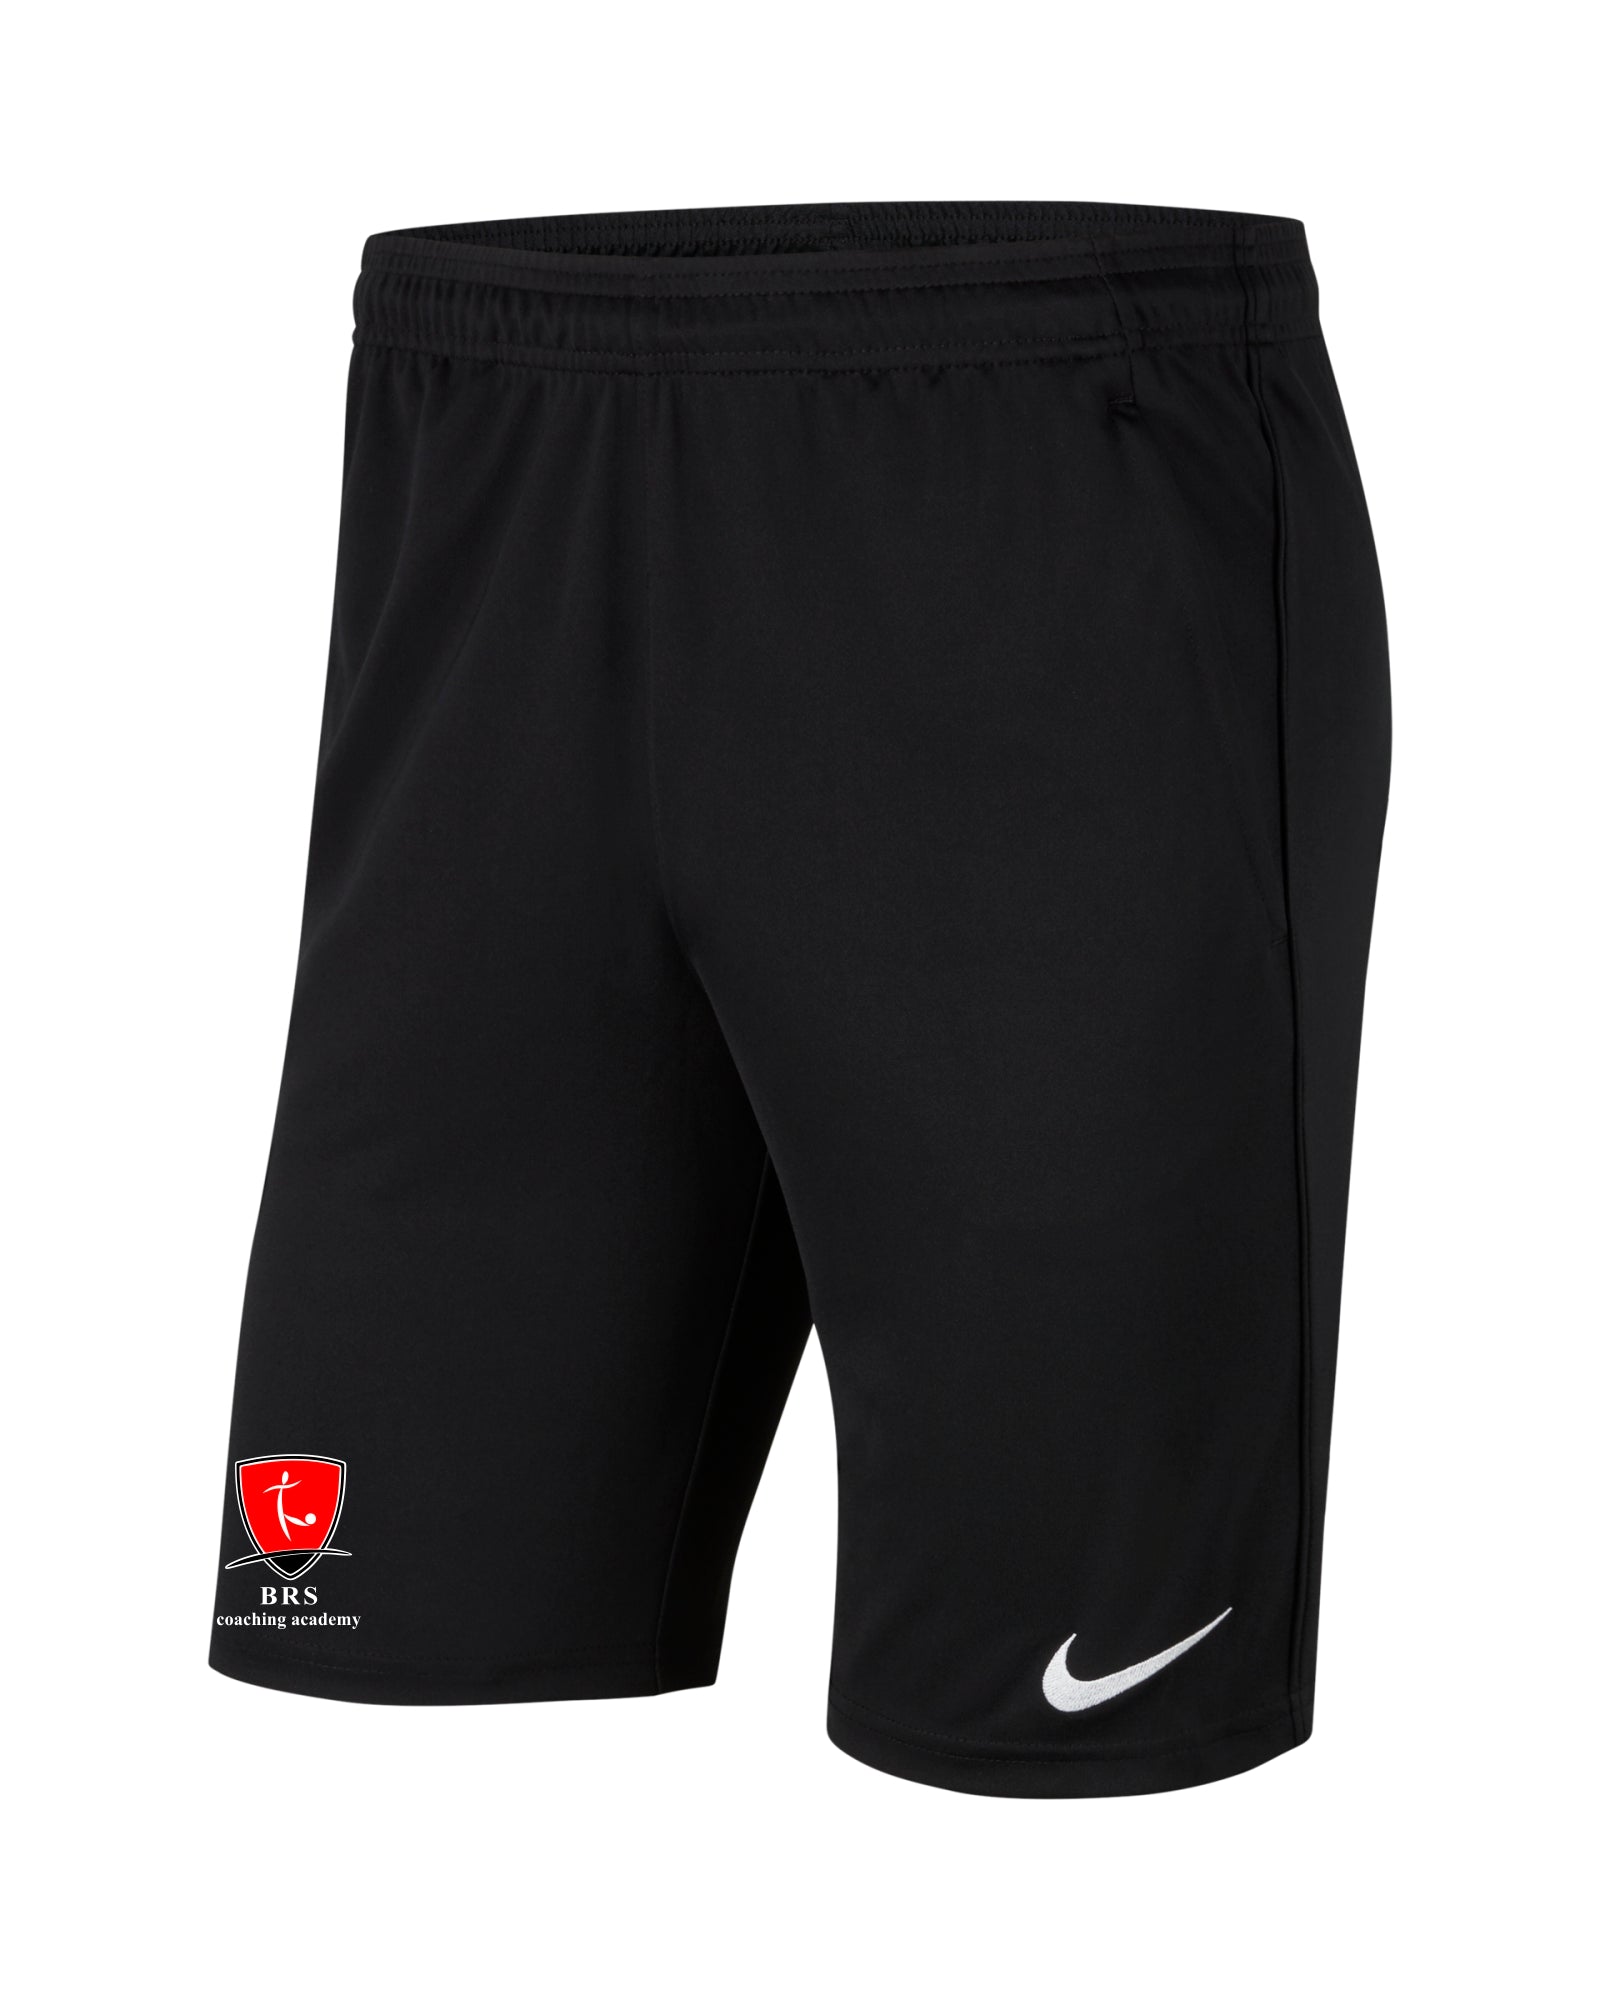 BRS Coaches - Nike Park 20 Knit Short - Black